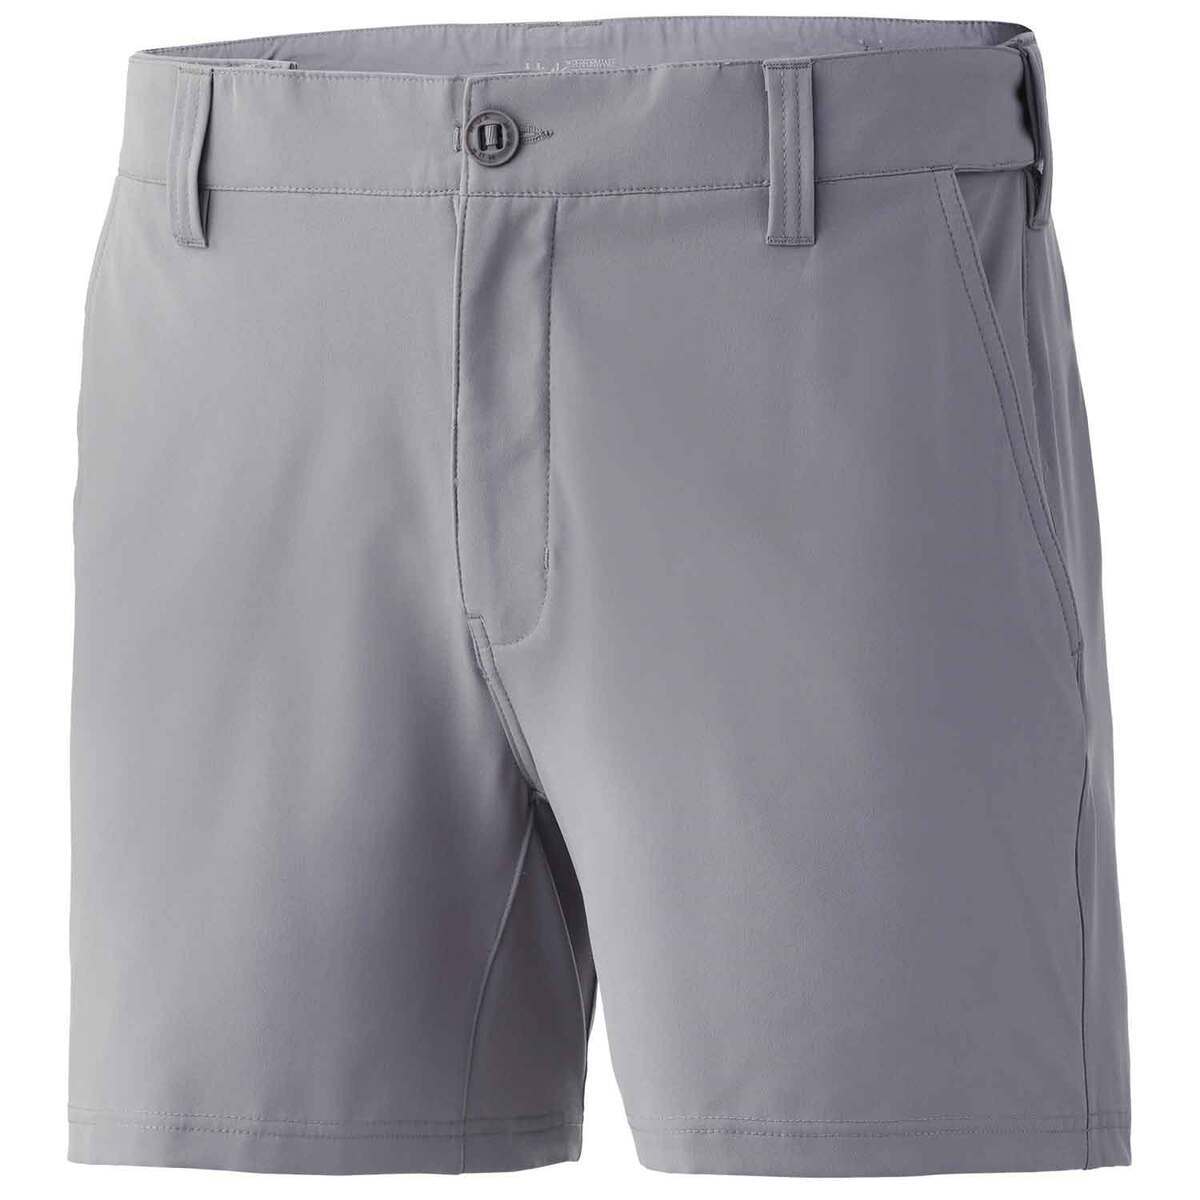 Huk Men's Pursuit Fishing Shorts - Overcast Grey - 3XL - Overcast Grey 3XL